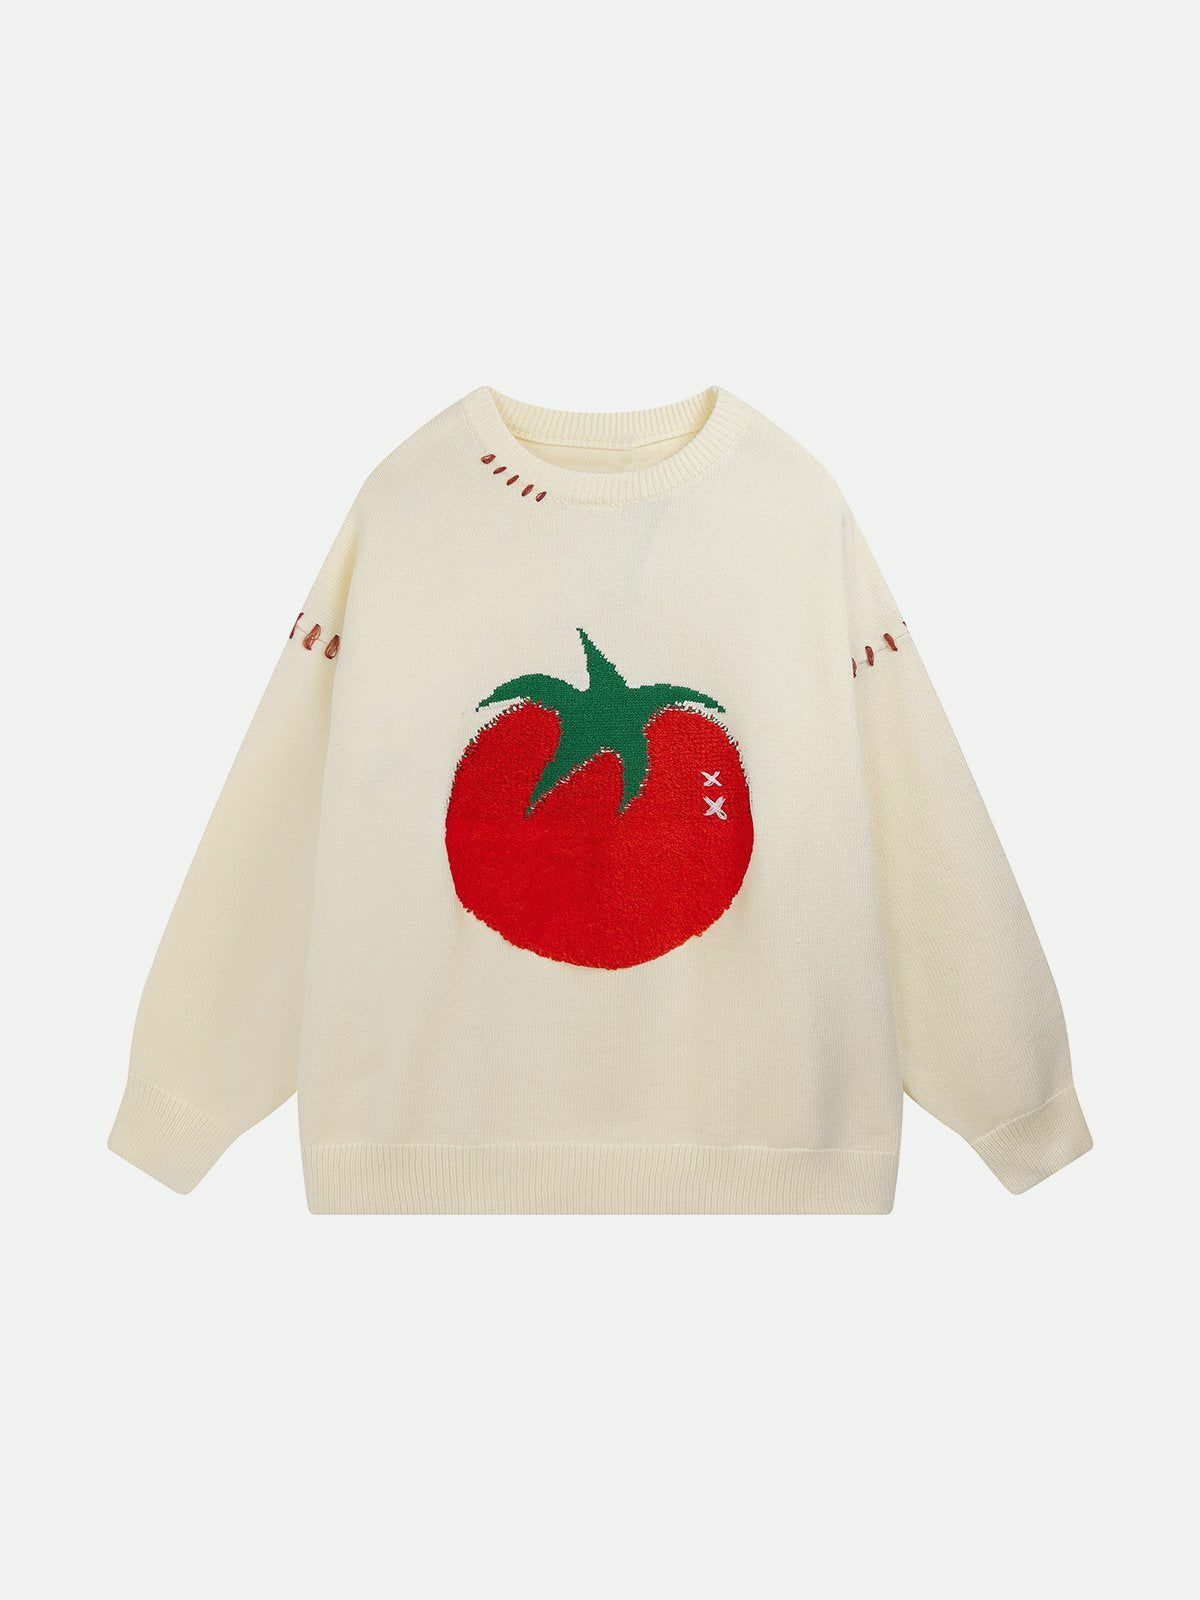 vibrant tomato jacquard sweater chic & trendy streetwear 5921